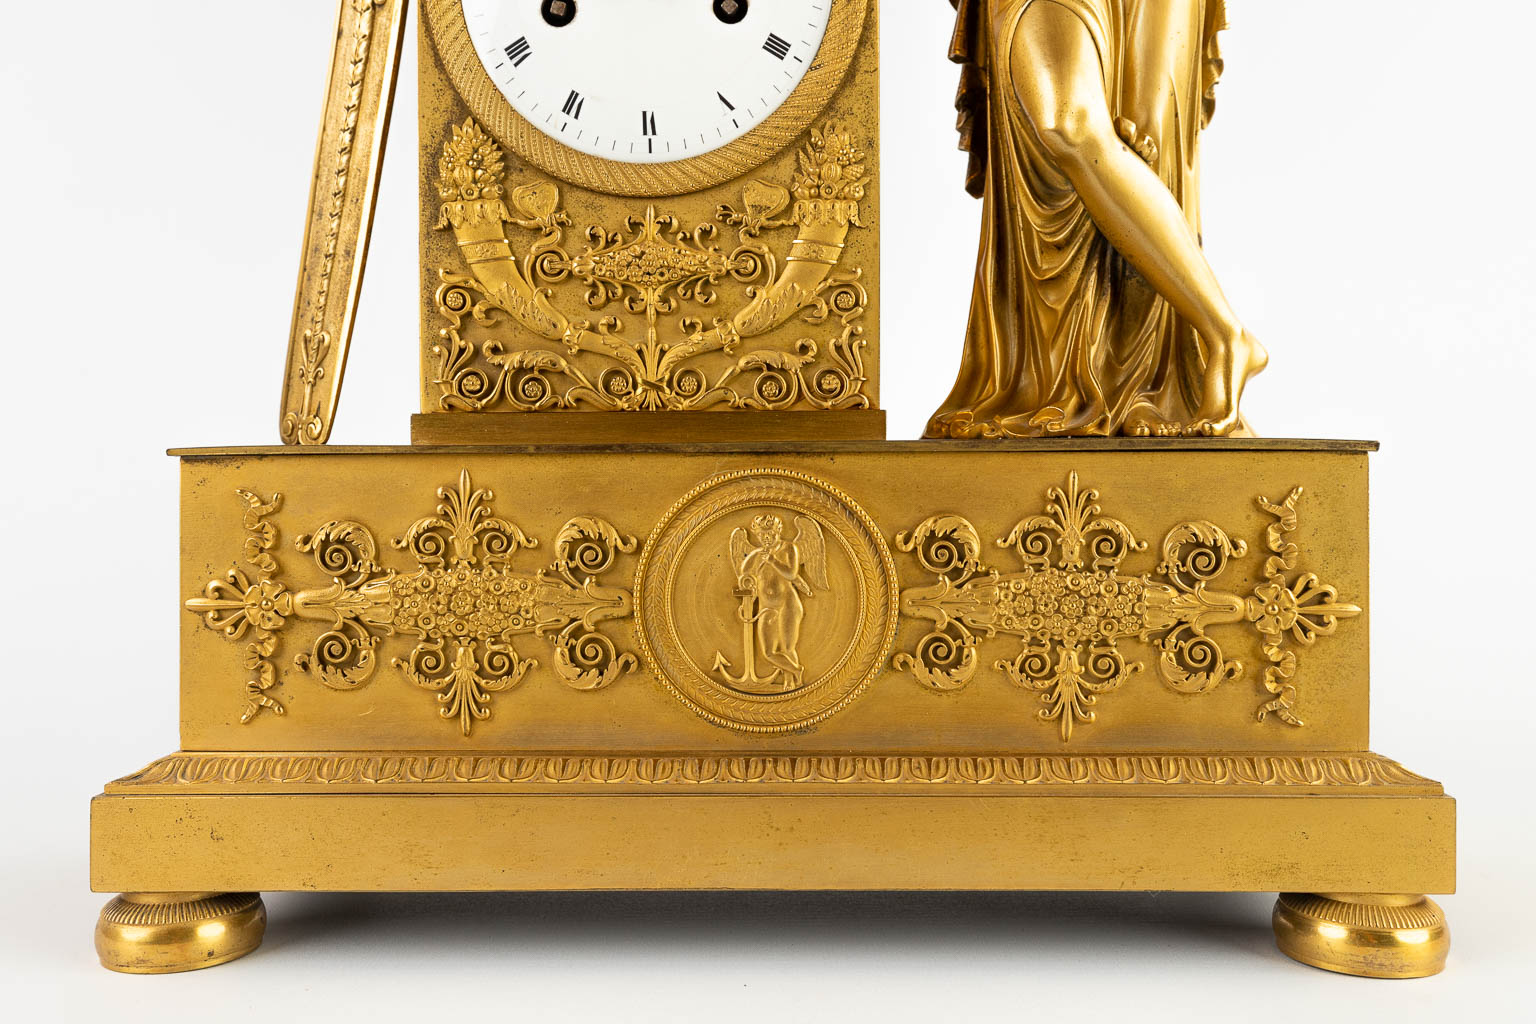 A mantle clock with elegant figurine, ormolu gilt bronze, Empire. 19th C. (D:13 x W:32,5 x H:44 cm)